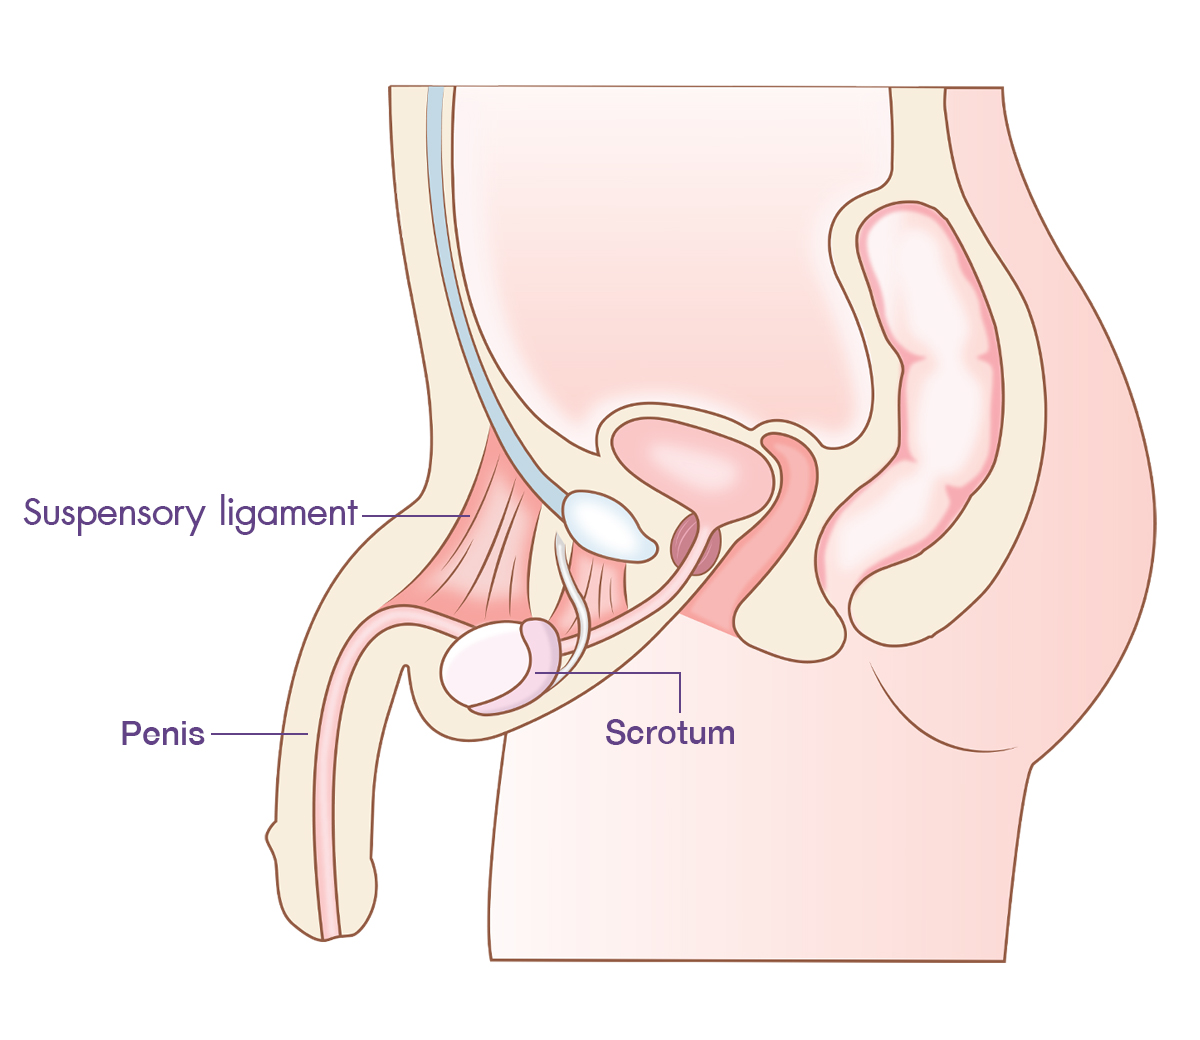 penile_suspensory_ligament